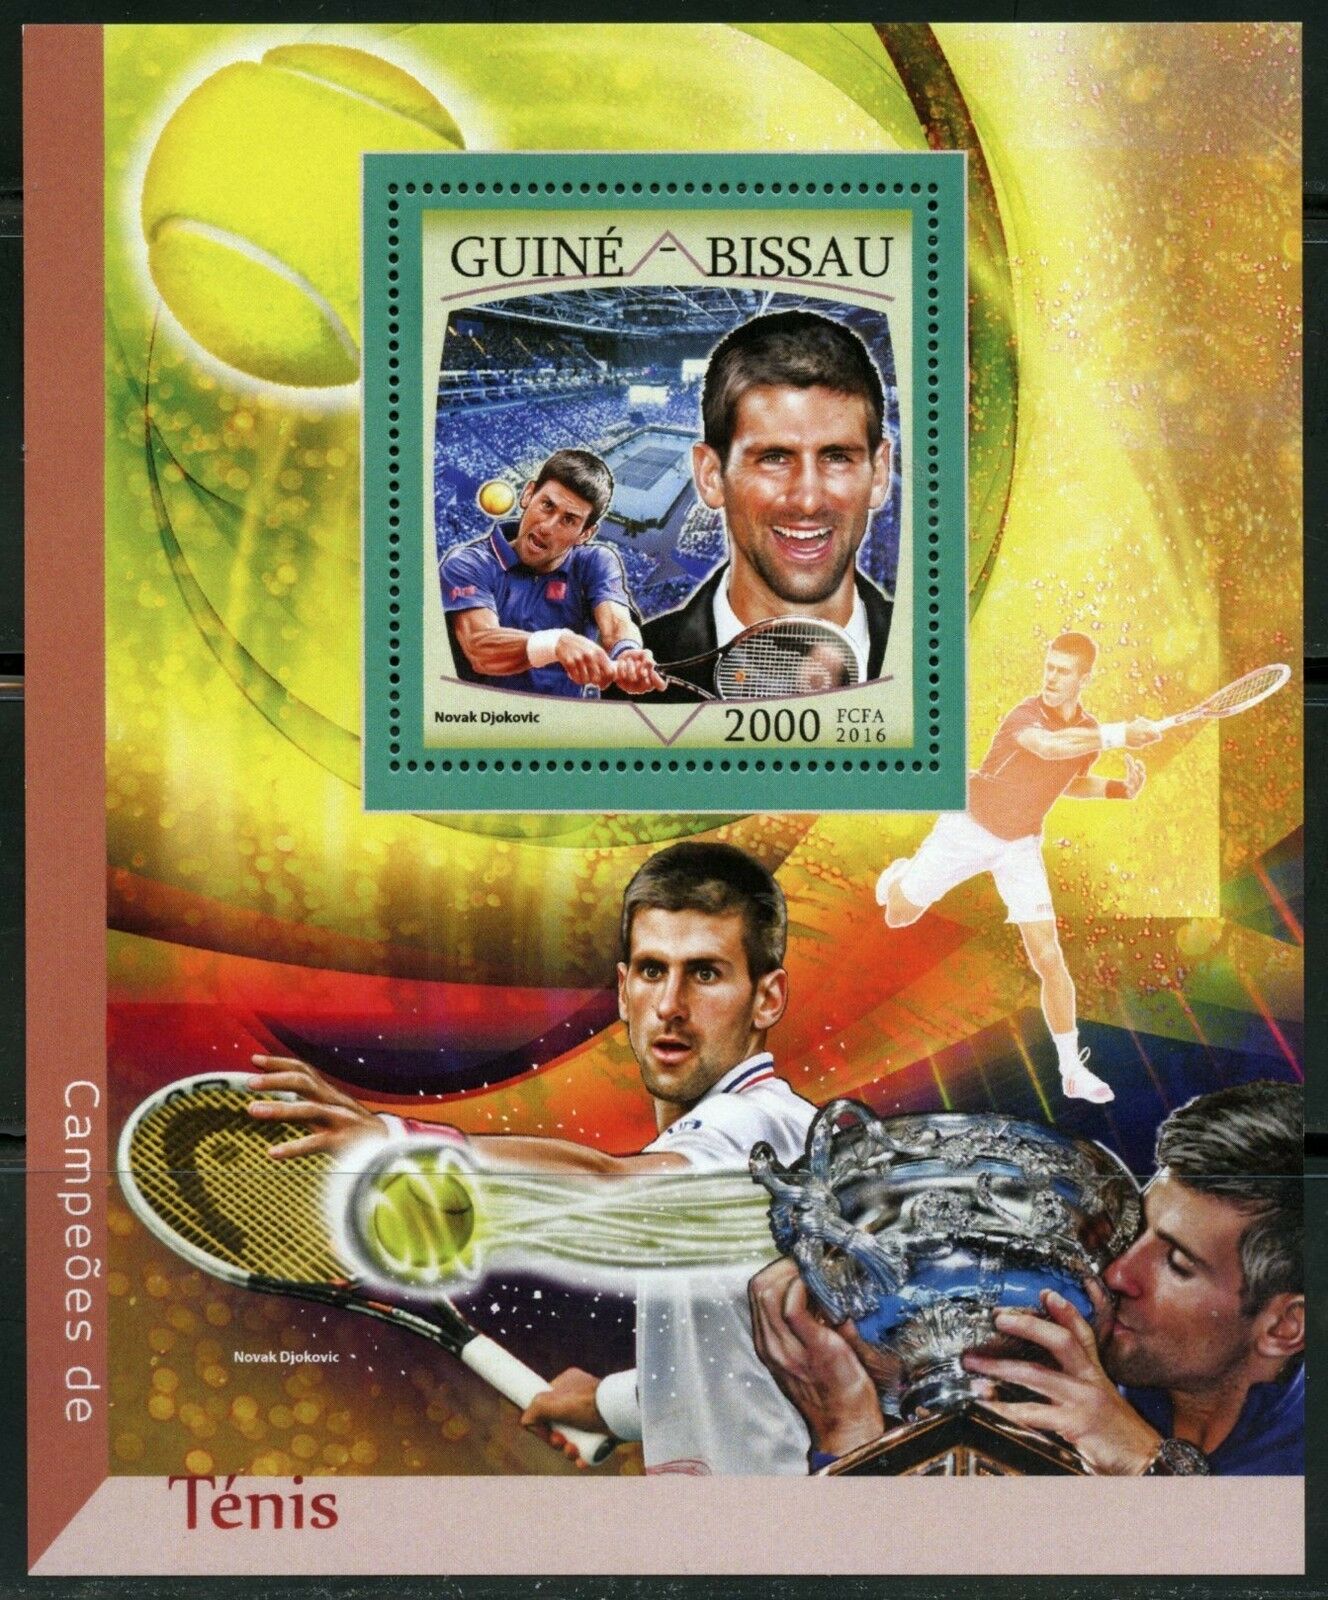 Guinea Bissau  2016 Tennis Champions   Novak Djokovic  Souvenir Sheet  Mint Nh